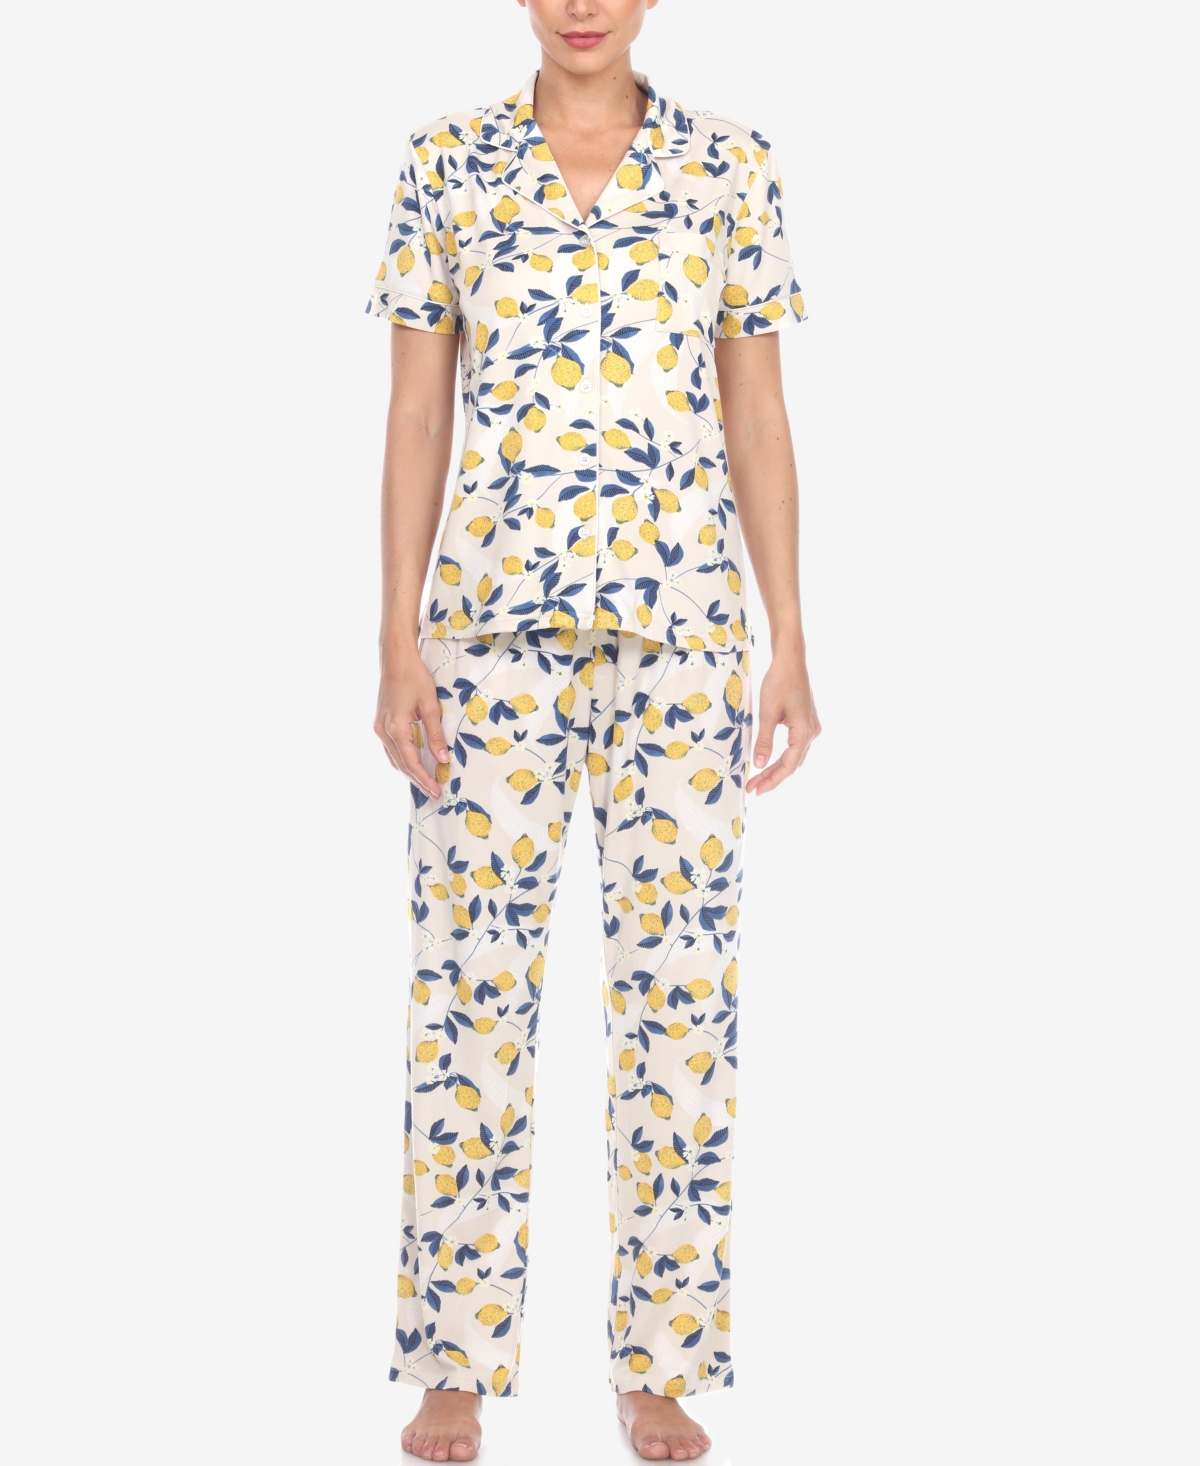 Women's 2 Piece Tropical Print Pajama Set - Beige, Lemon